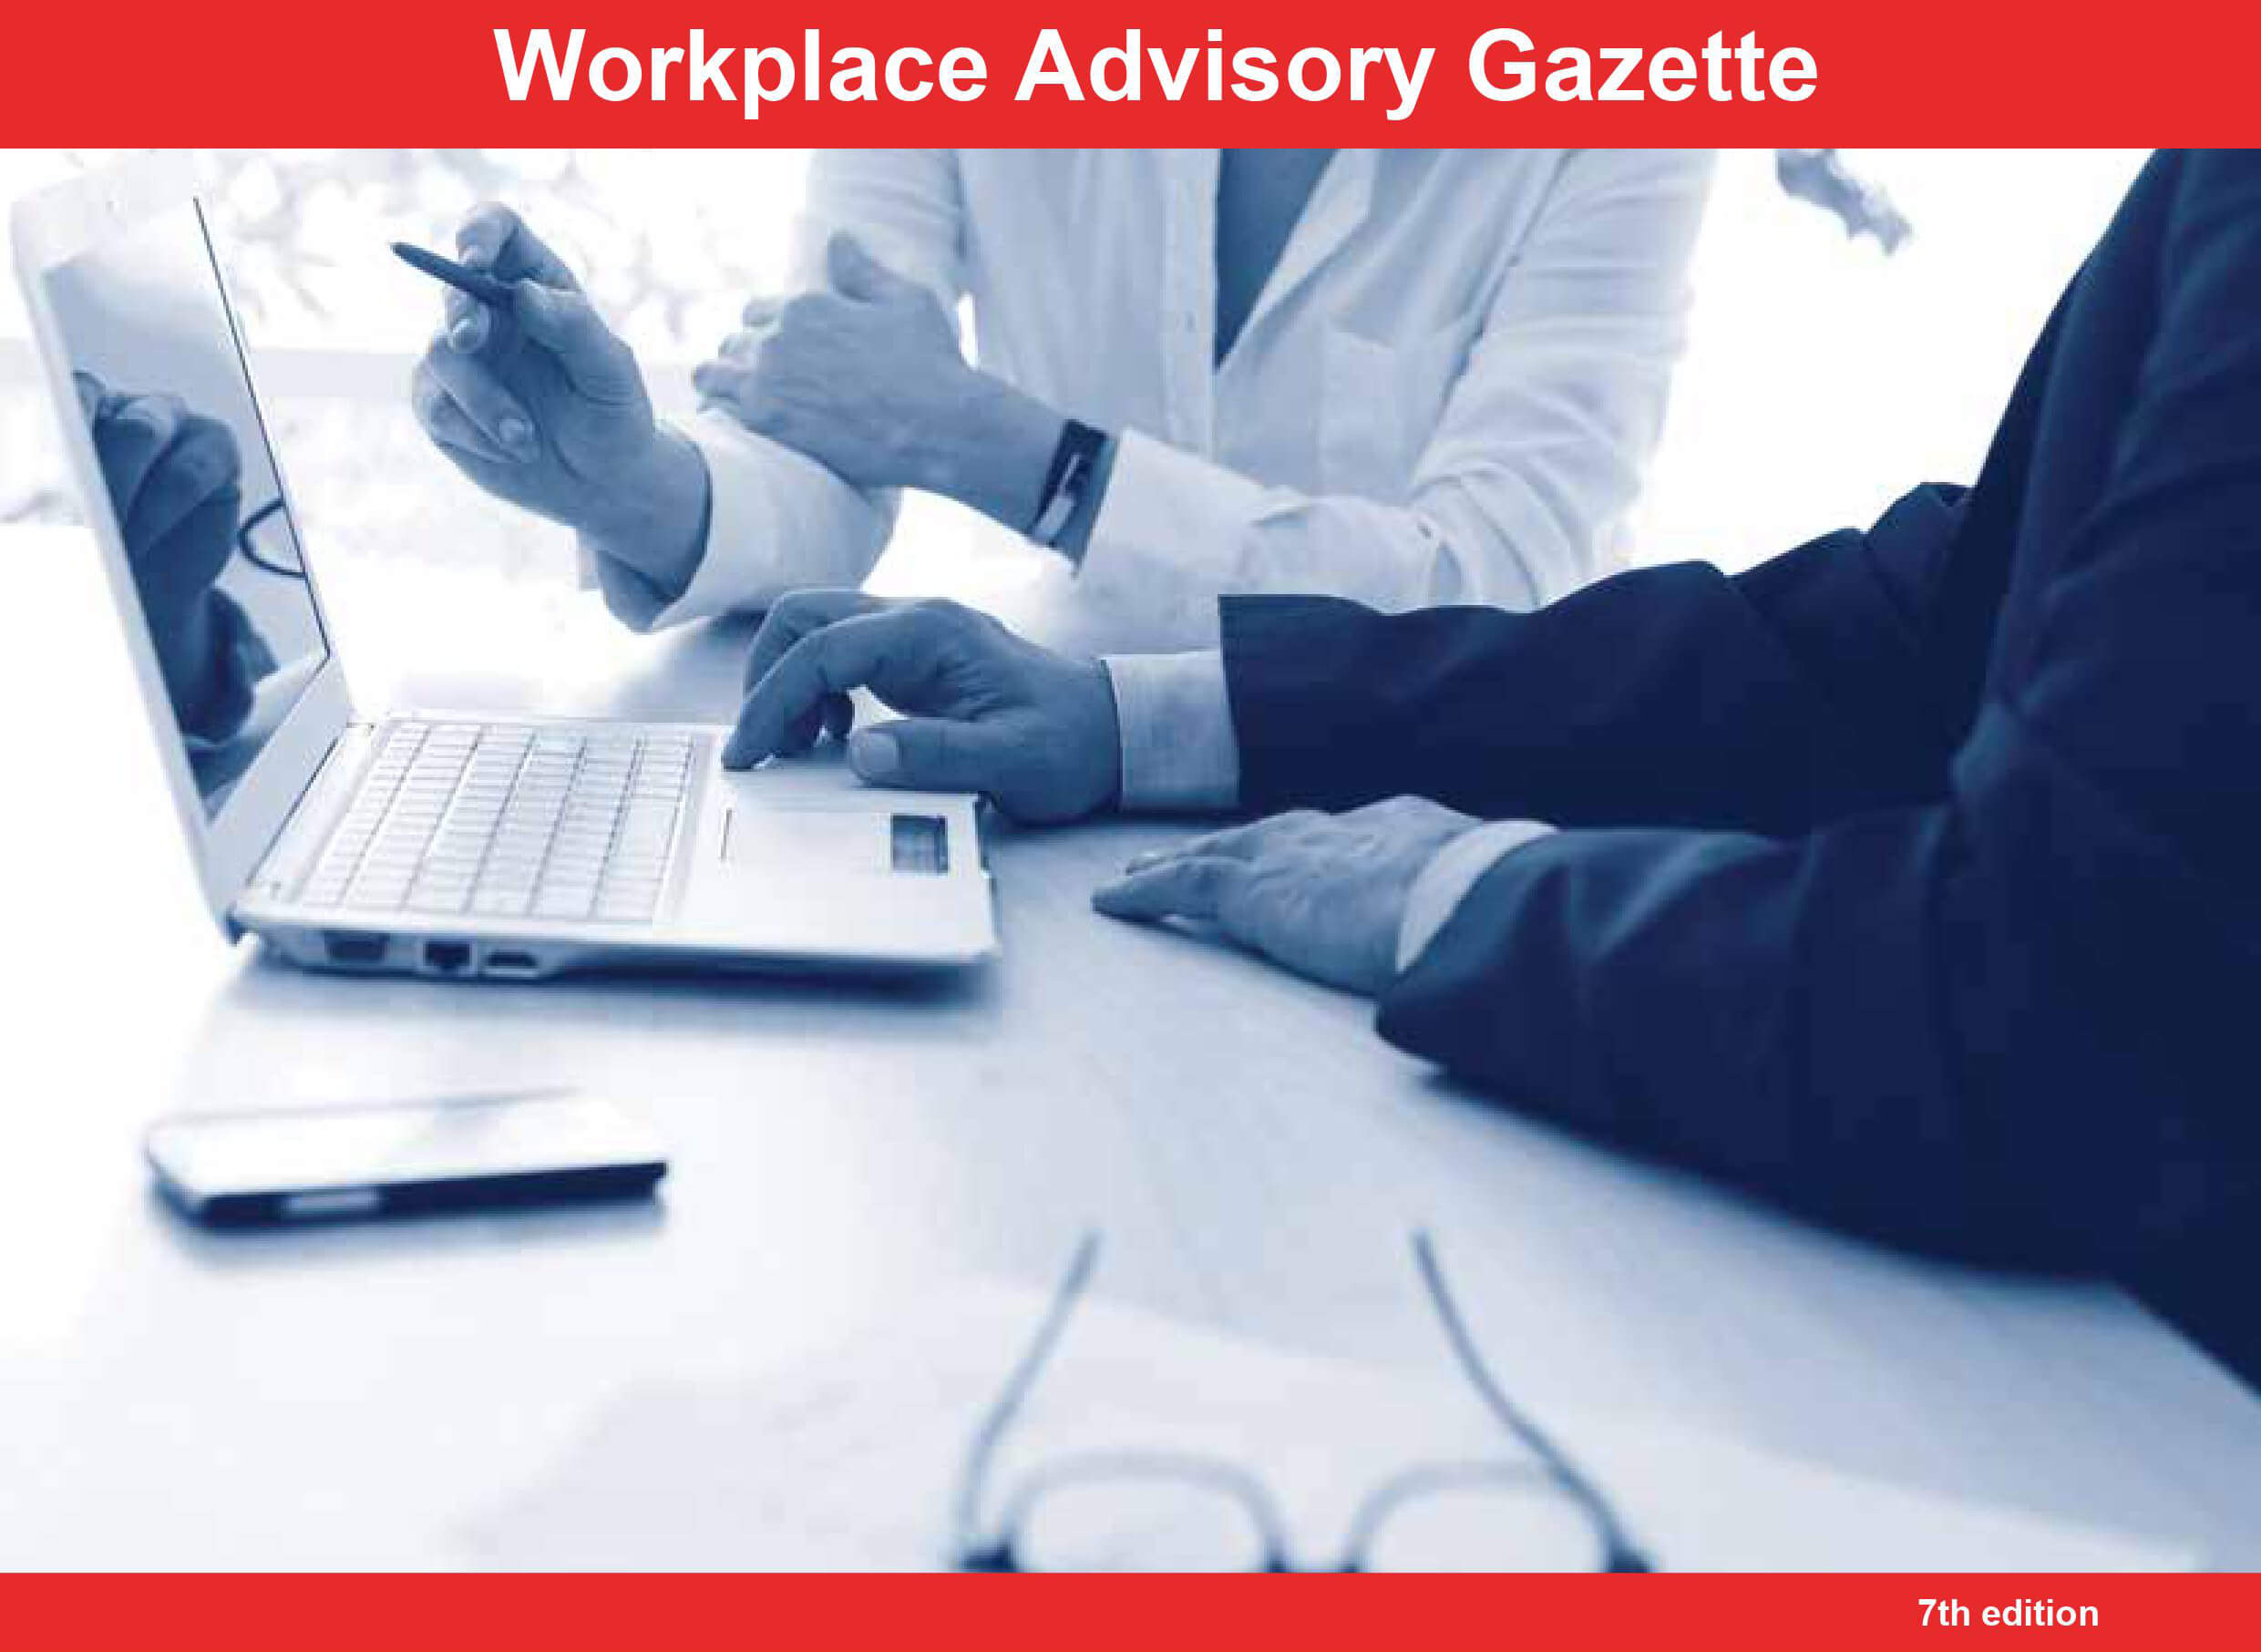 Workplace Advisory Gazette (7th edition)